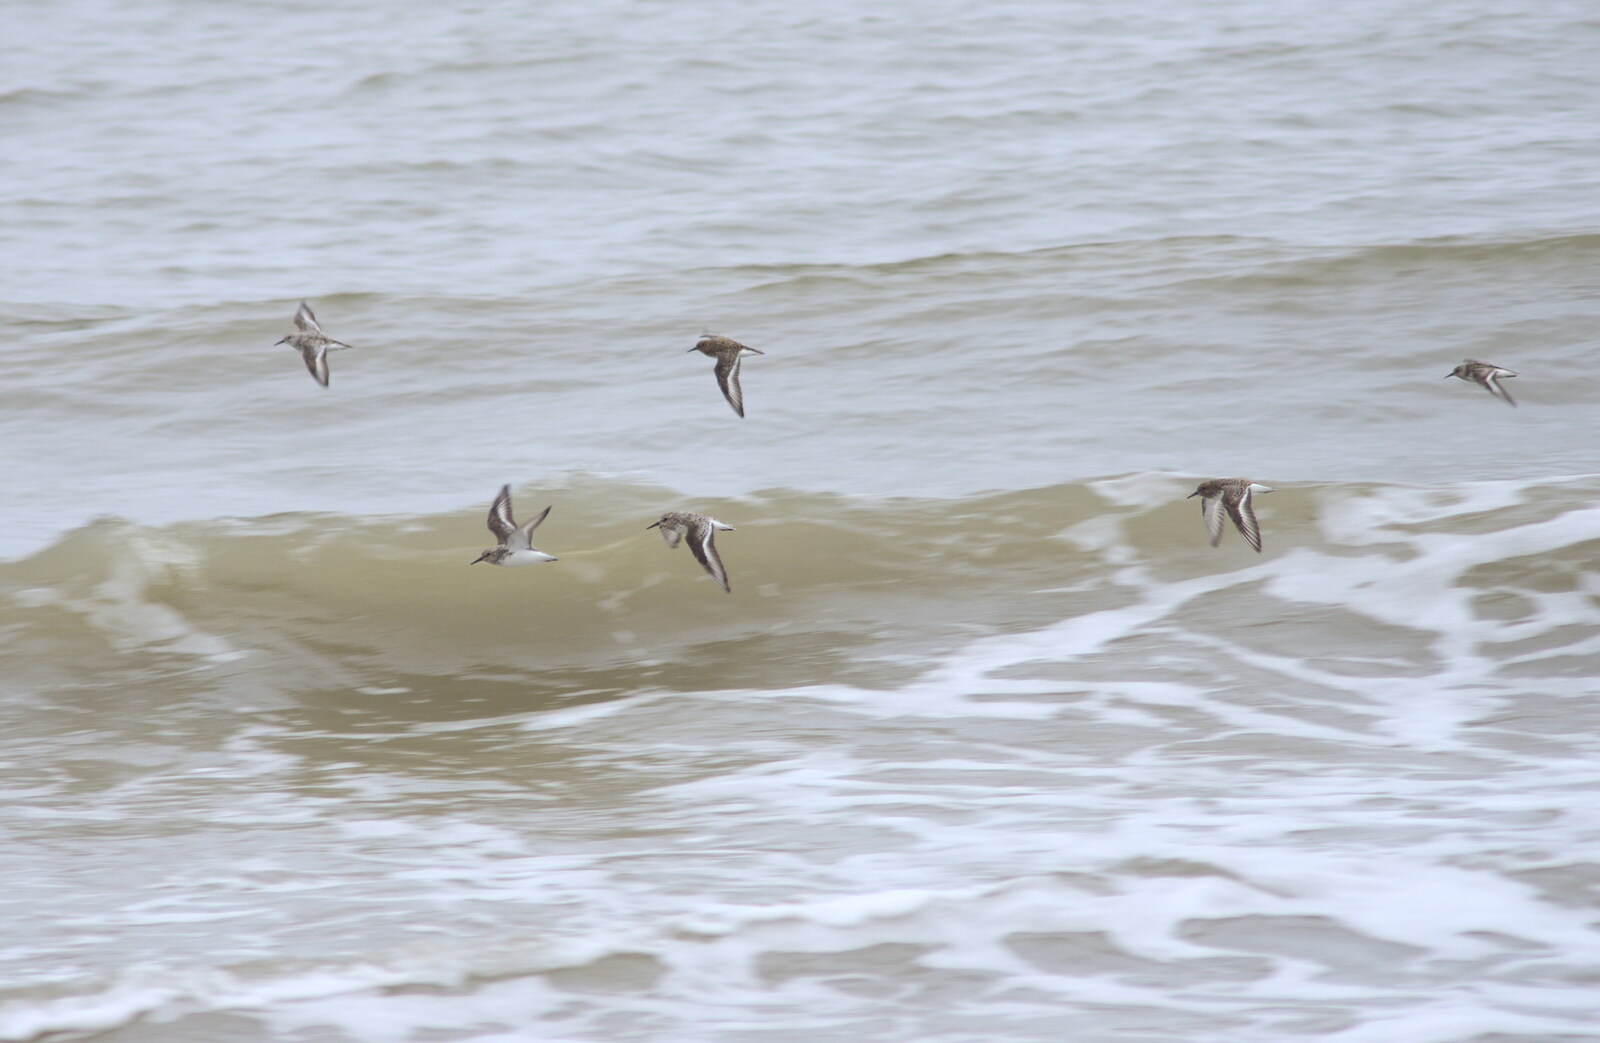 A flock of seabirds swings by from A Wet Weekend of Camping, Waxham Sands, Norfolk - 13th June 2015